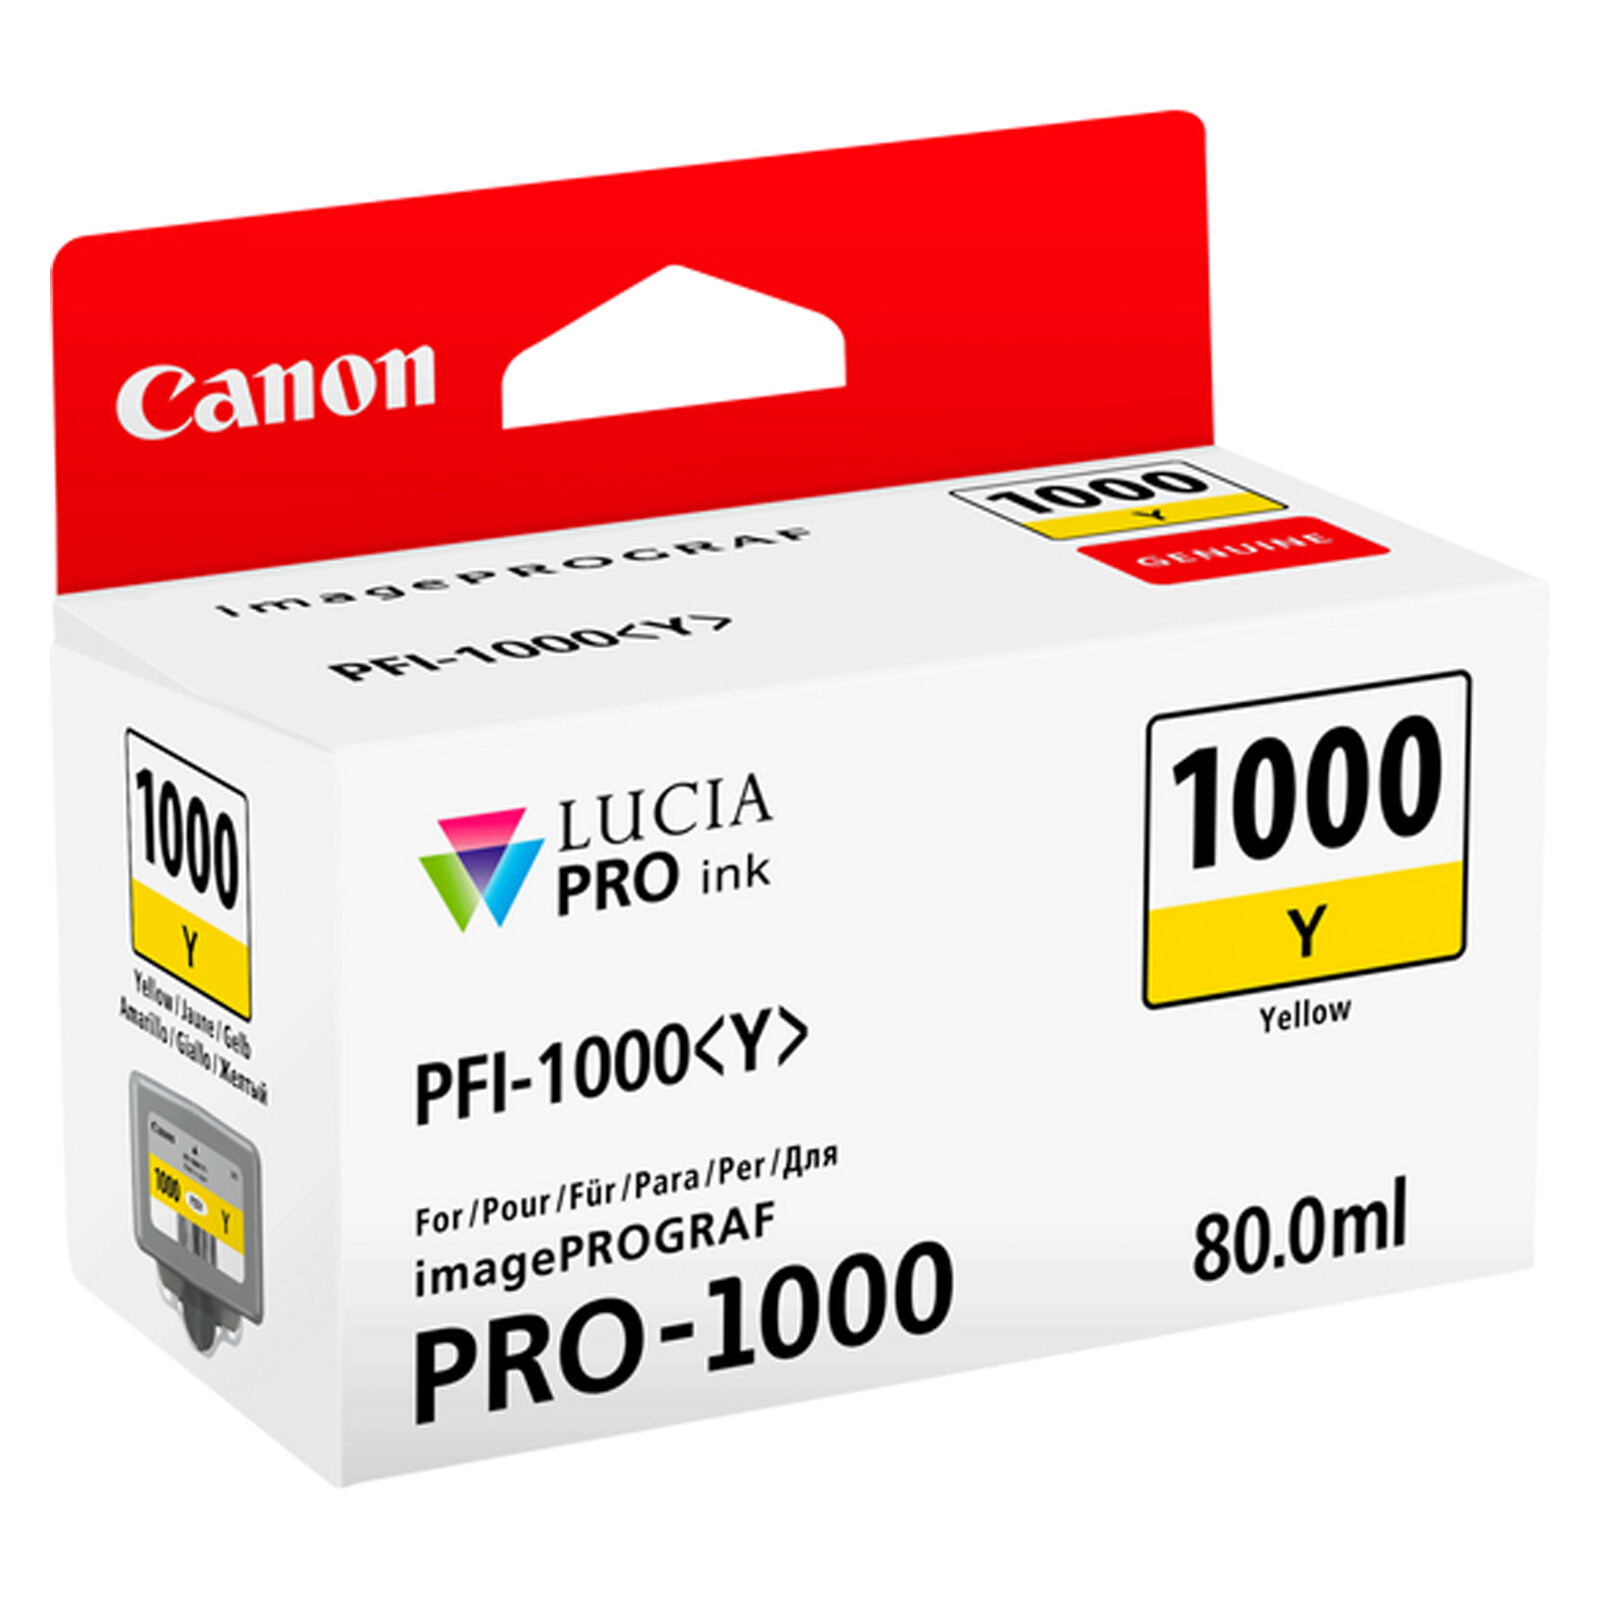 Canon PFI1000Y yellow imagePrograf Pro 1000